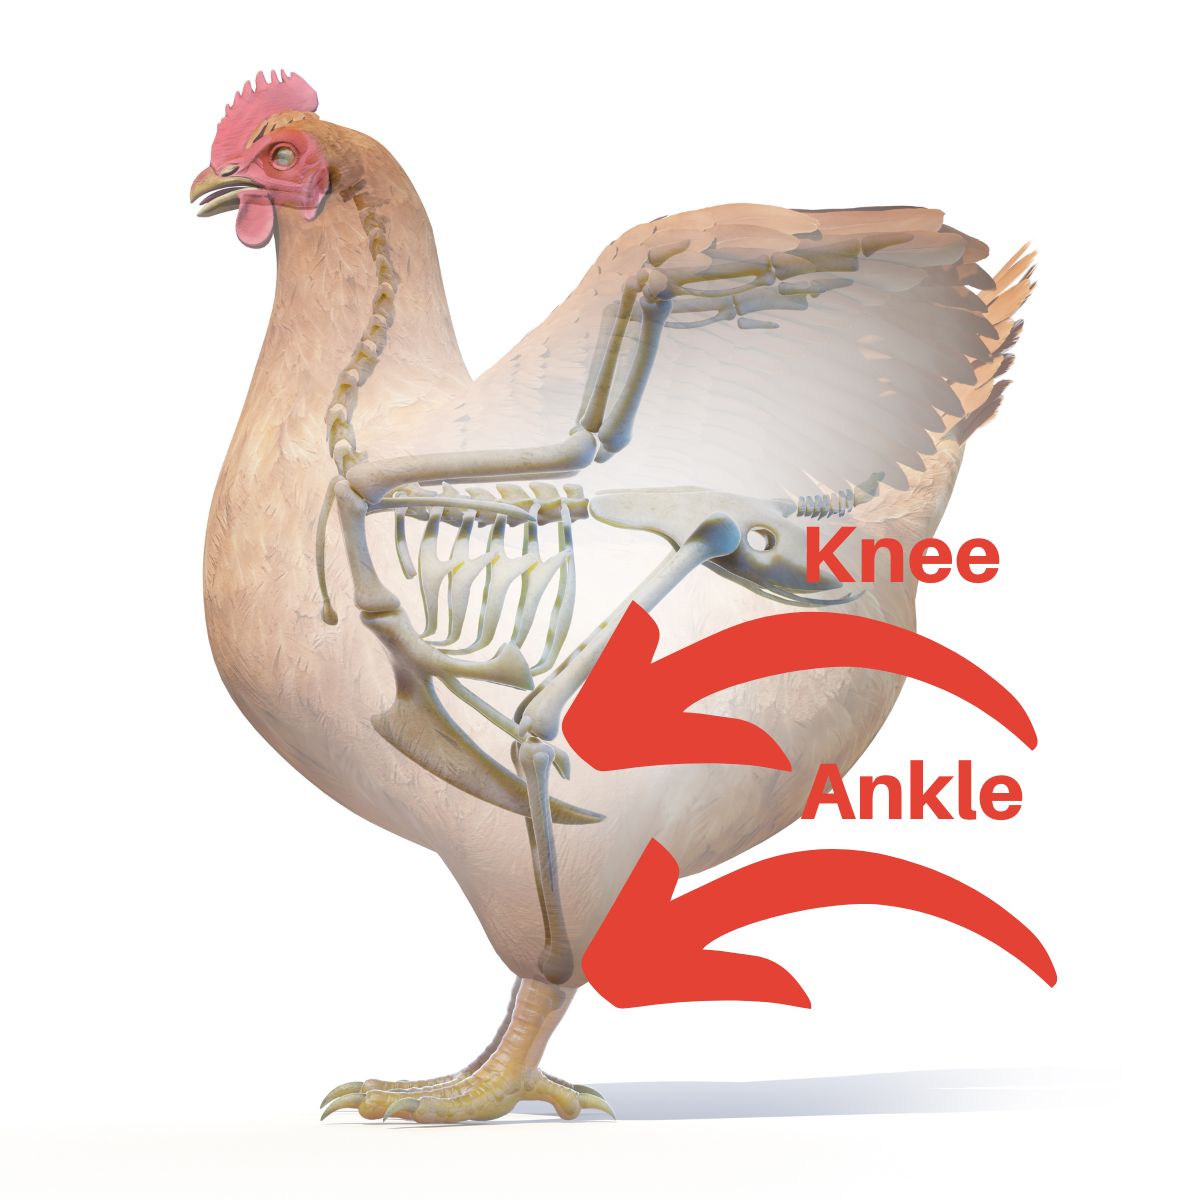 Skeletal system of a chicken.